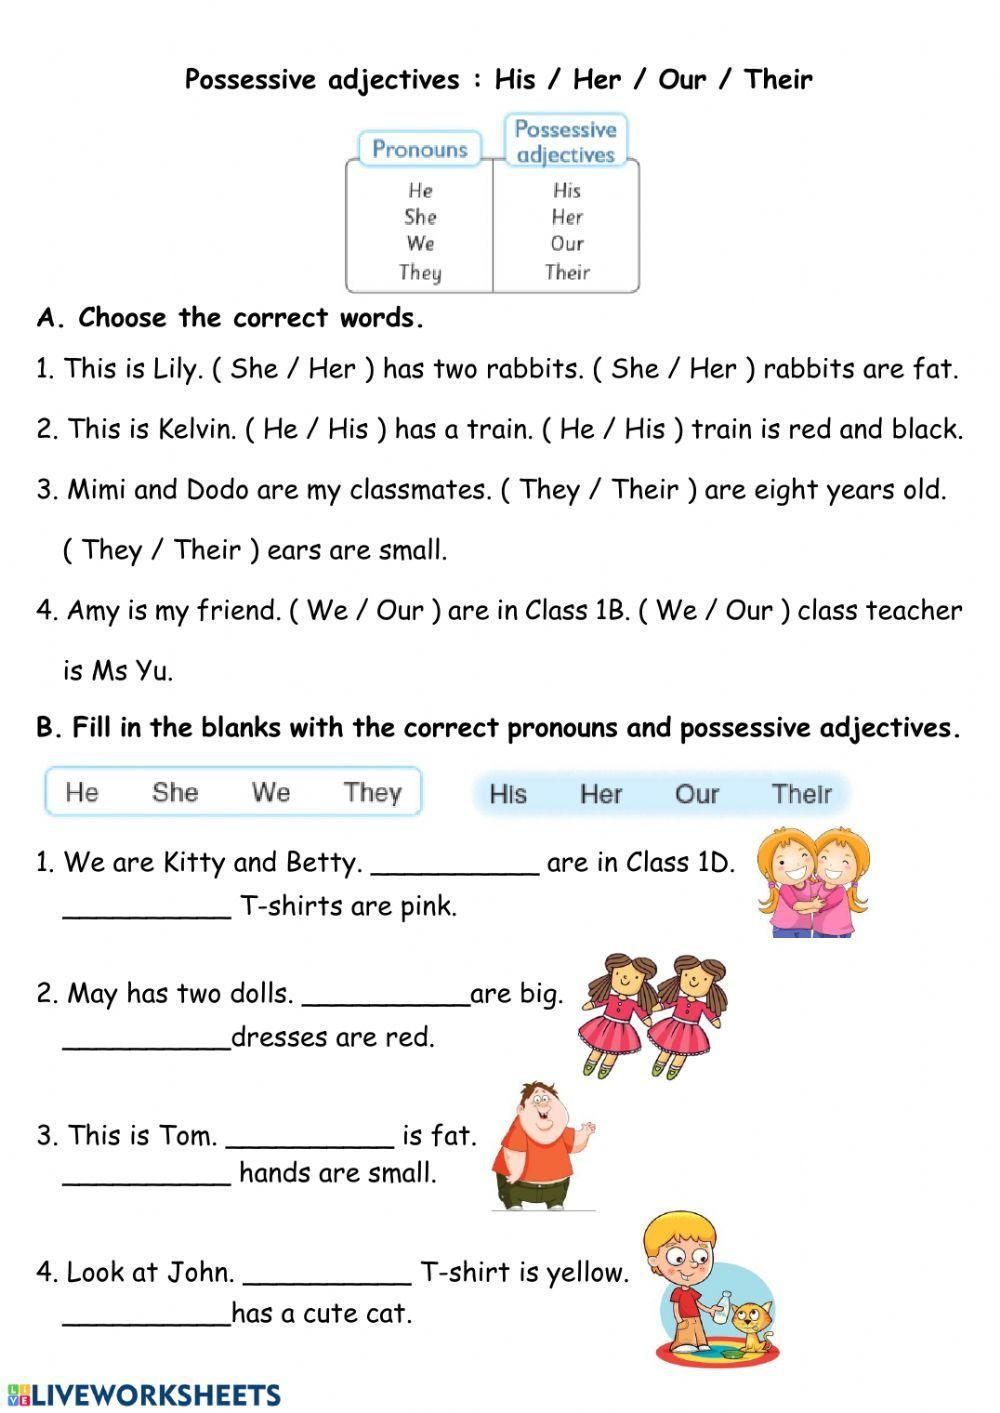 Pronouns And Pronoun Adjectives Worksheet Possessive Nouns Worksheets